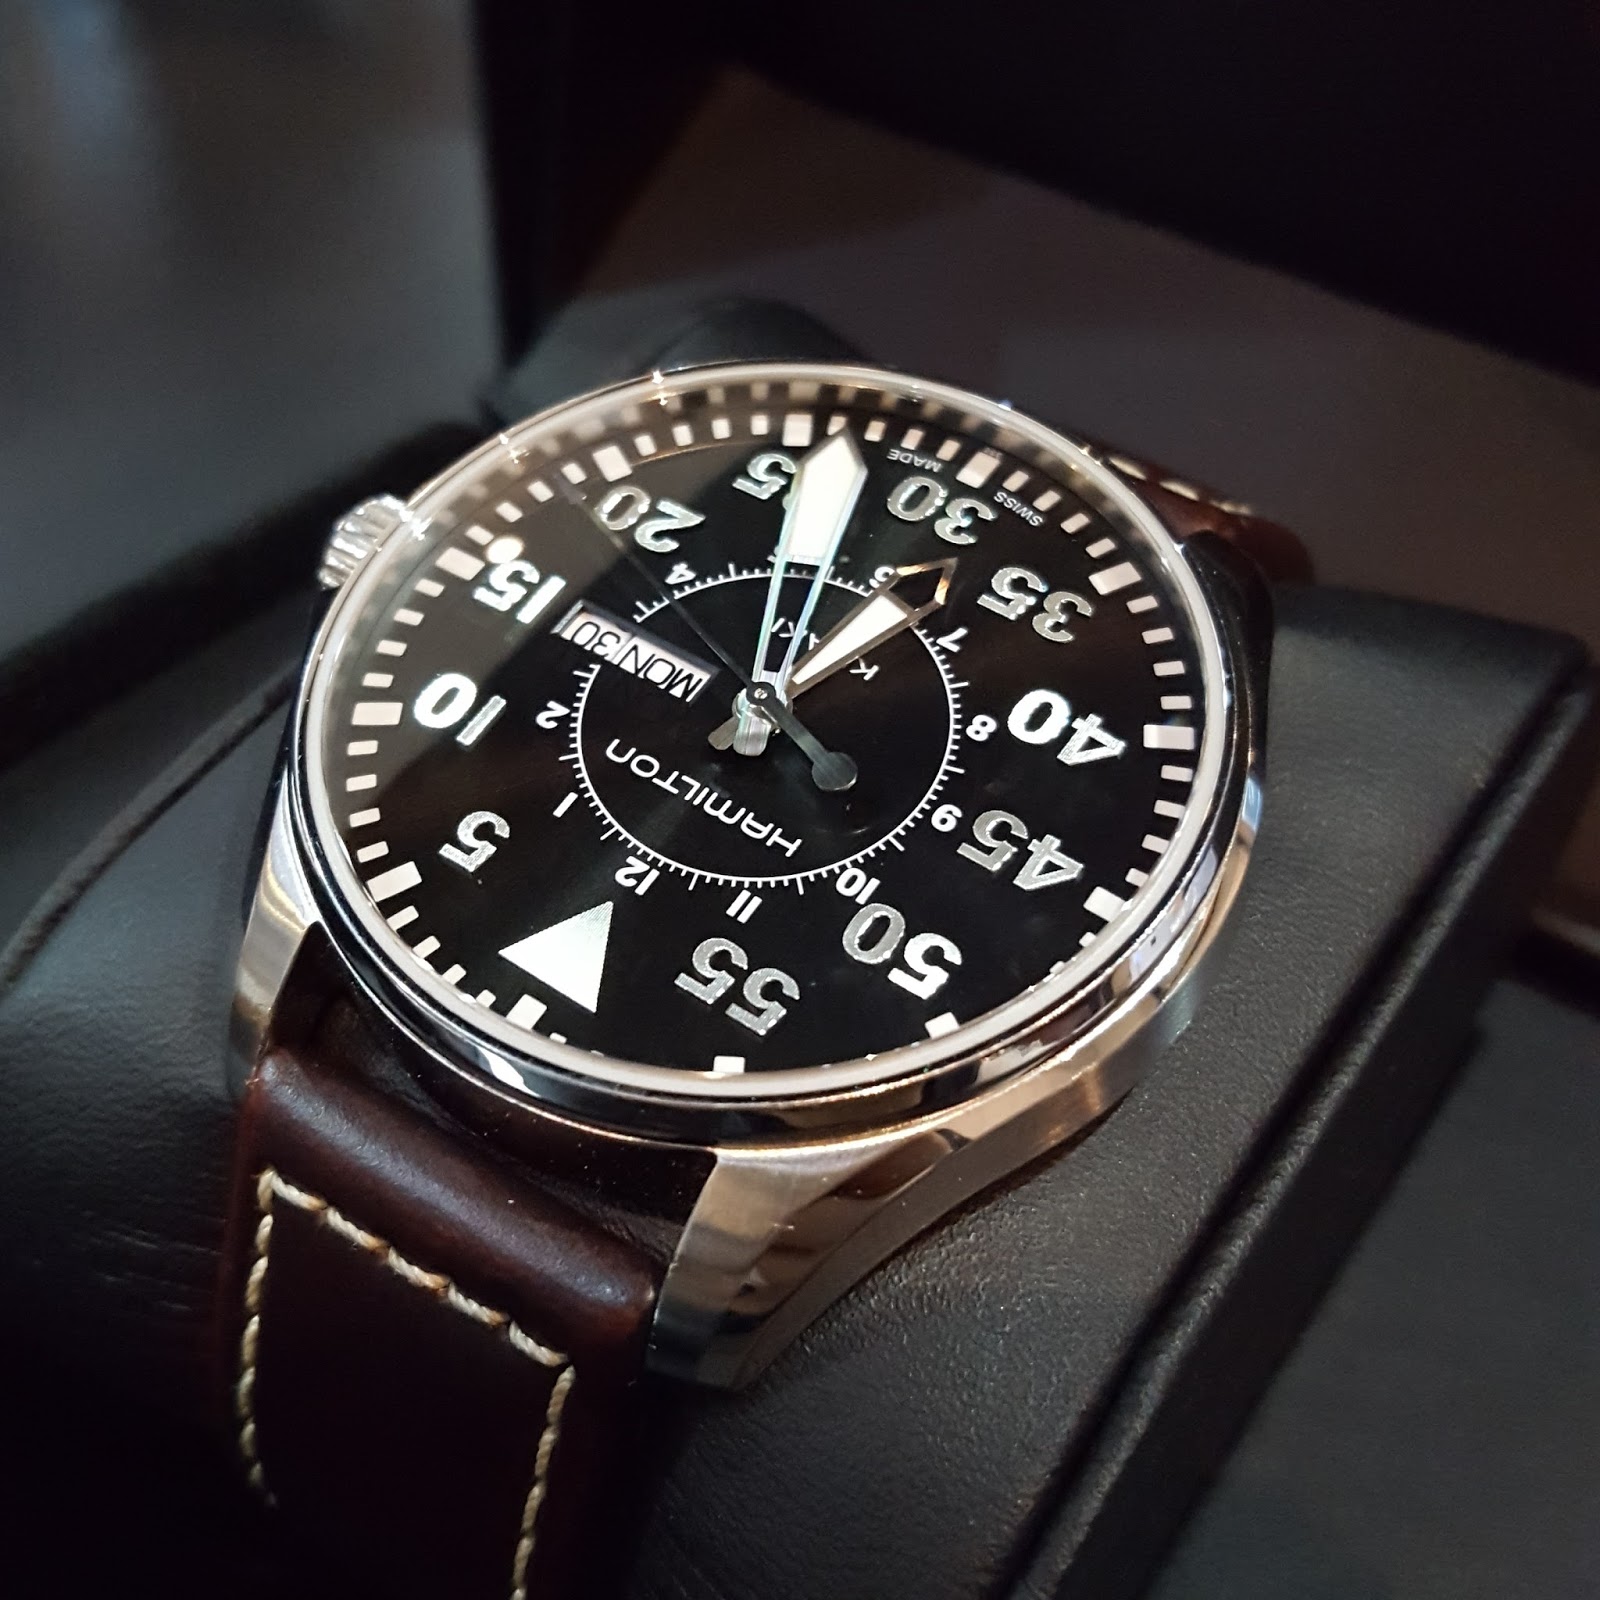 Khaki aviation. Hamilton Khaki Aviation. Hamilton Aviation часы. Часы Hamilton h646110. Hamilton 42 mm.